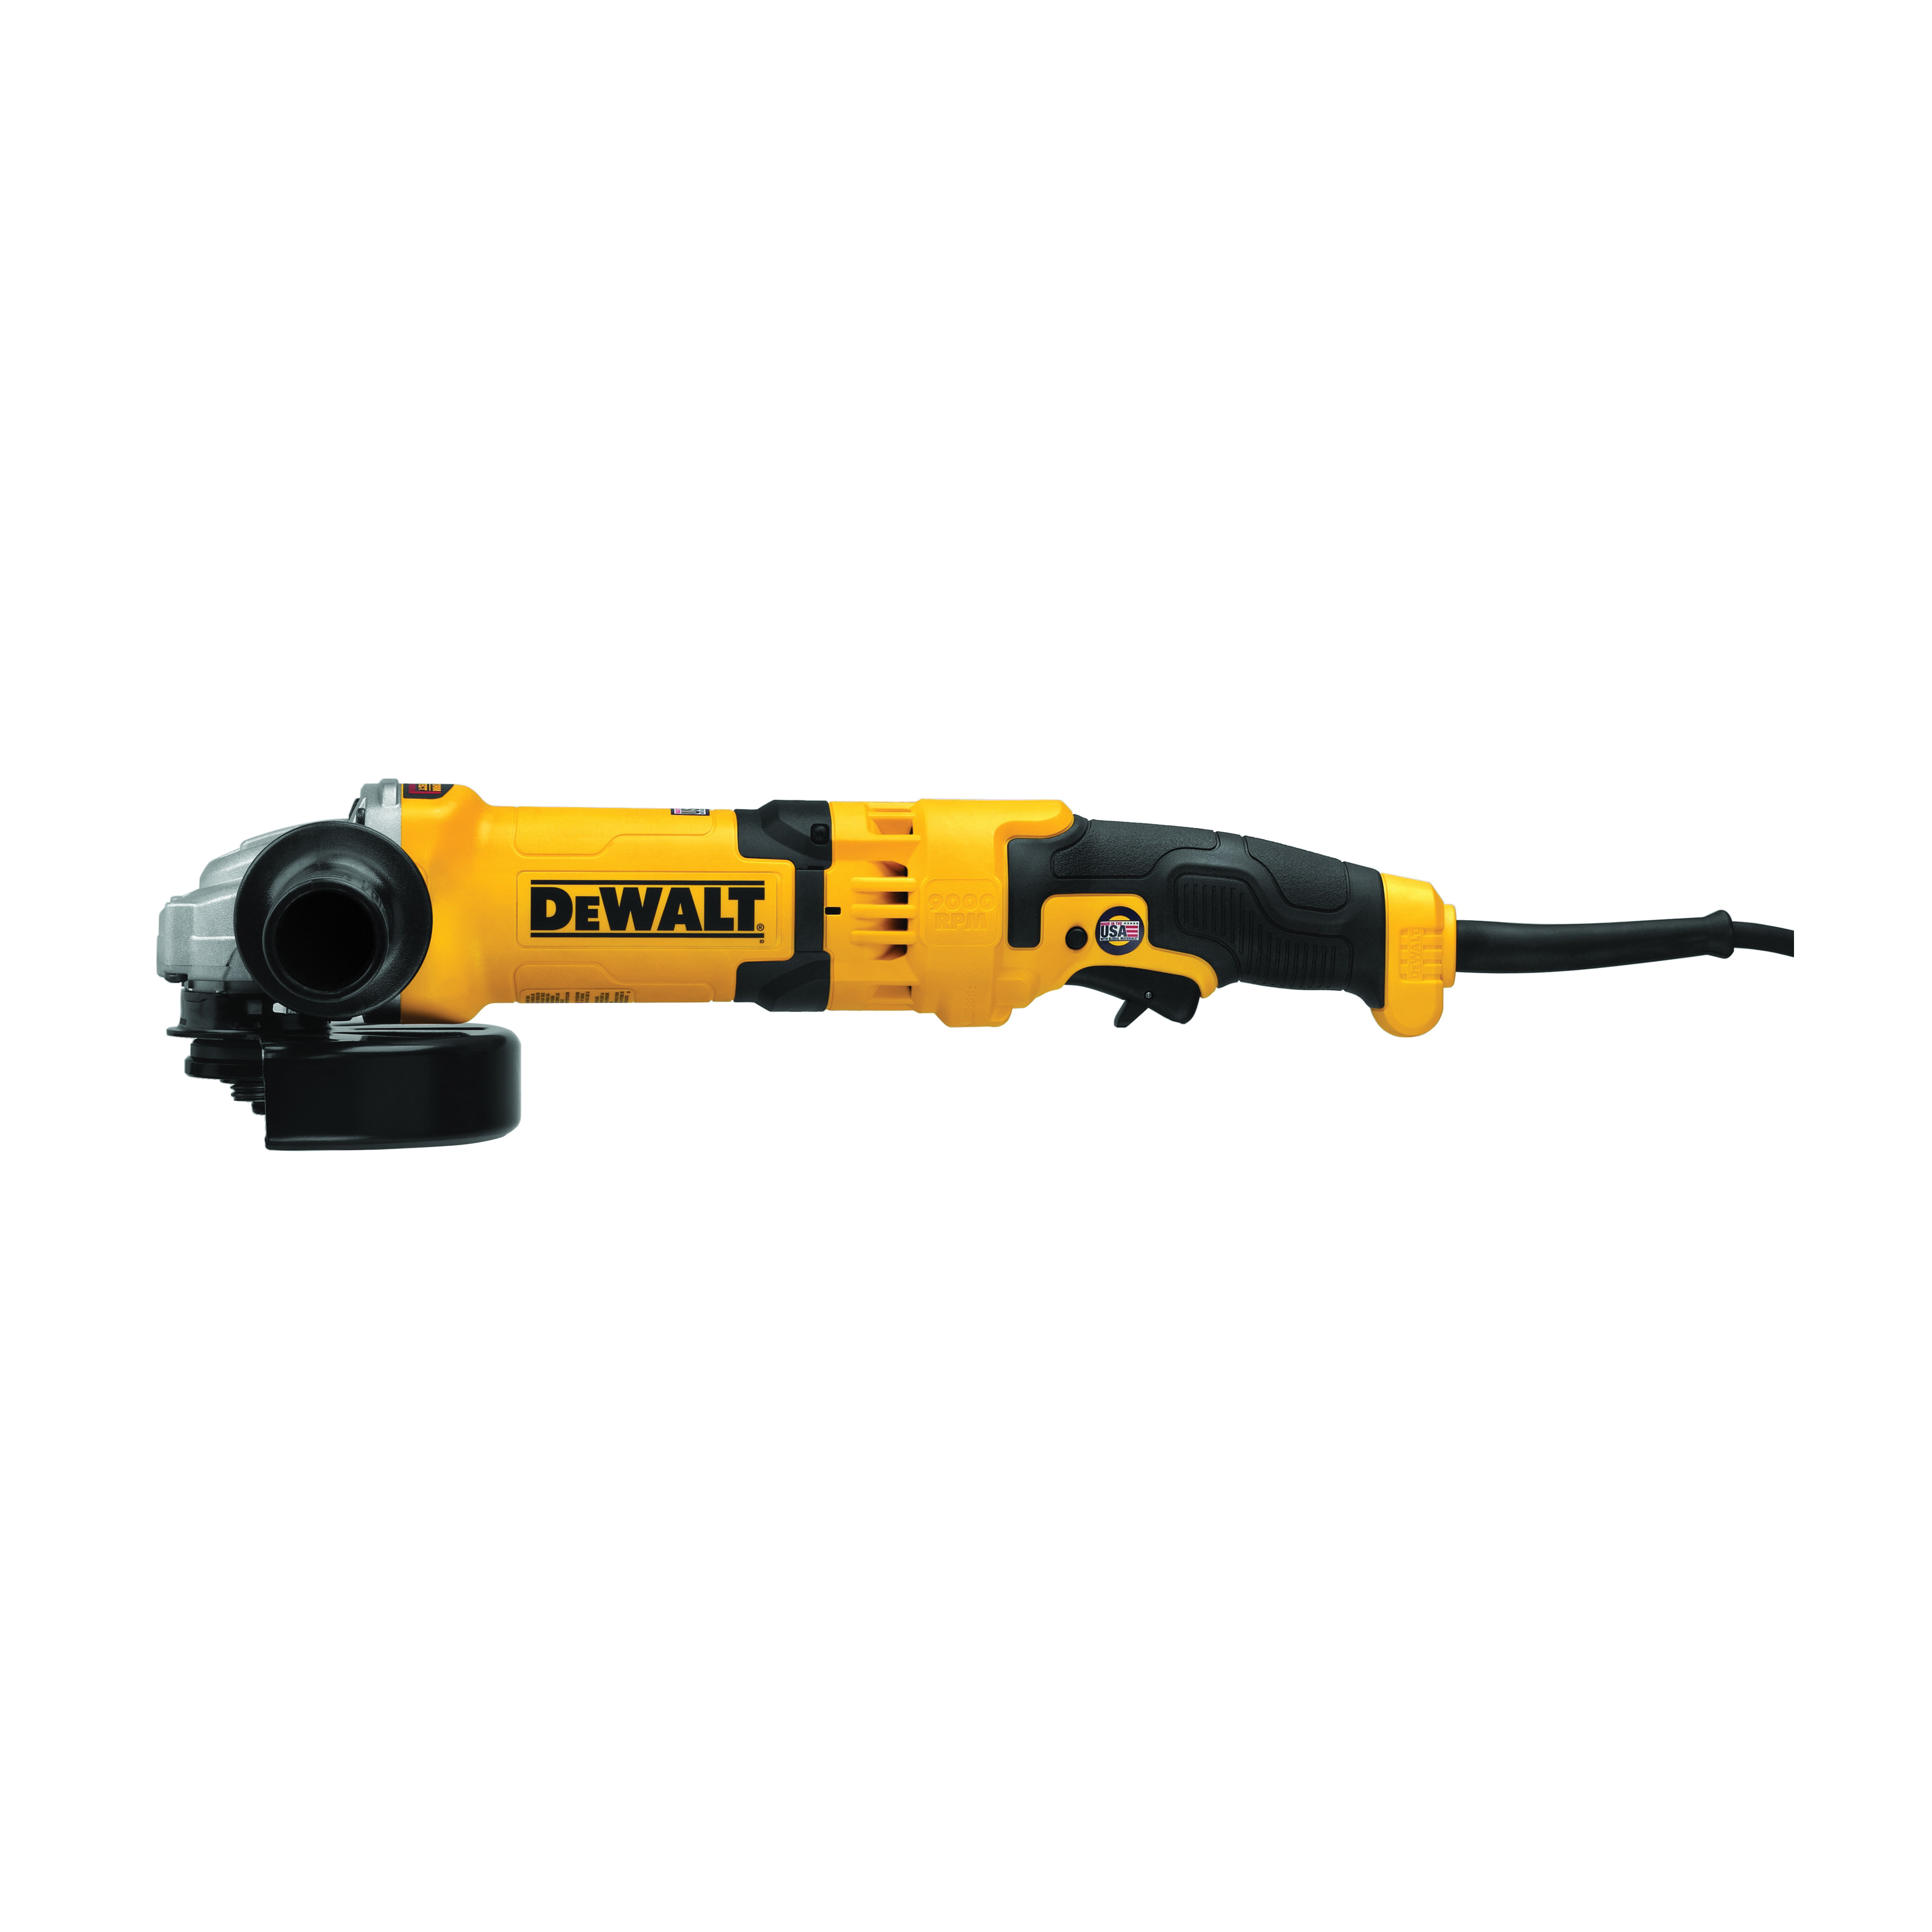 DeWALT® DWE43066 Heavy Duty High Performance Small Angle Grinder, 6 in Dia Wheel, 5/8-11 Arbor/Shank, 120 VAC, Black/Yellow, Yes, Trigger Switch